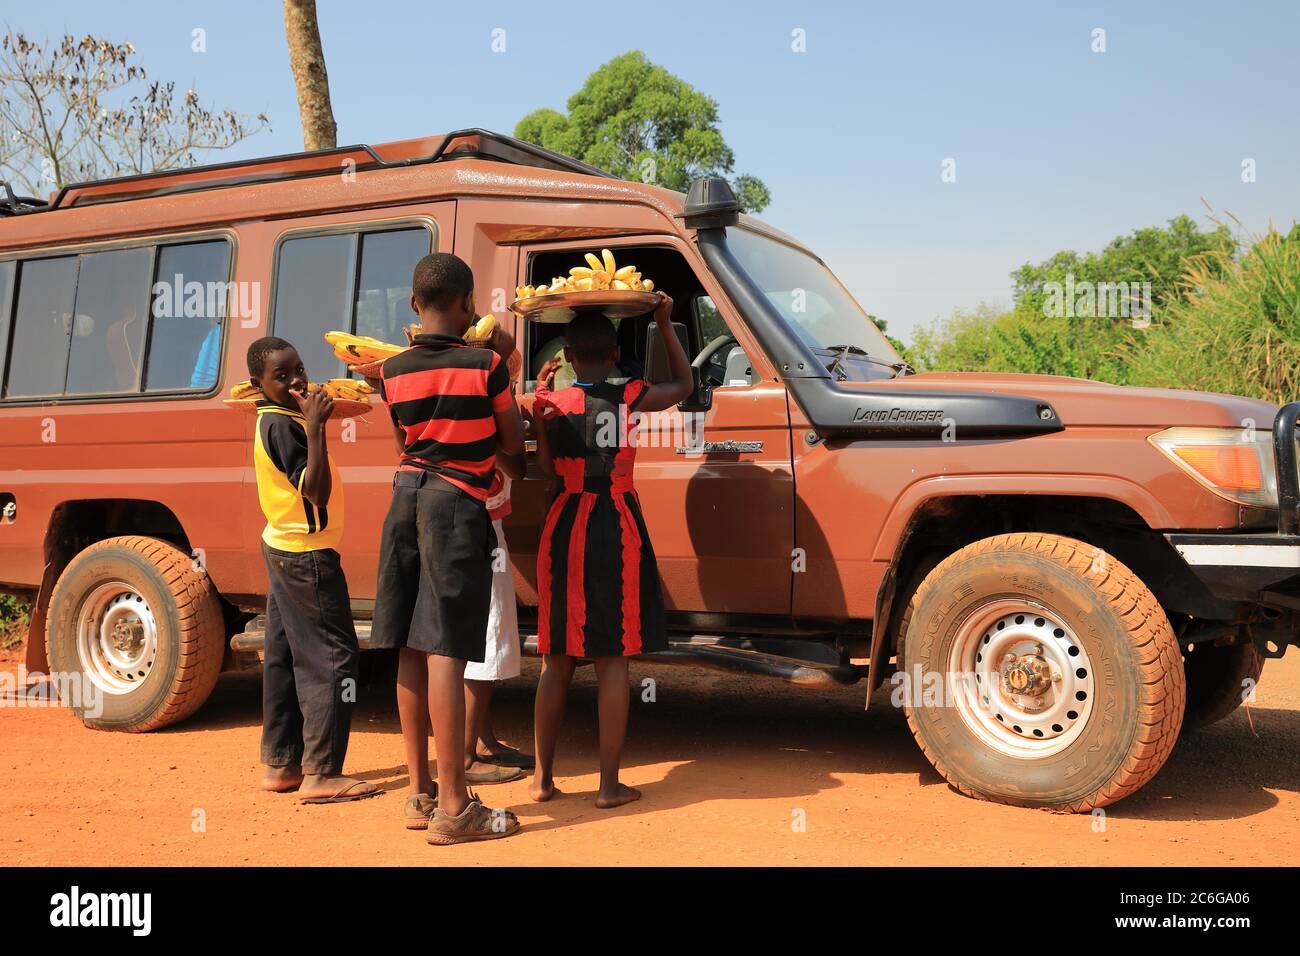 Bananas, Musaceae (Musaceae) banana plant, car, children, sale, street, street, Uganda, East Africa Stock Photo